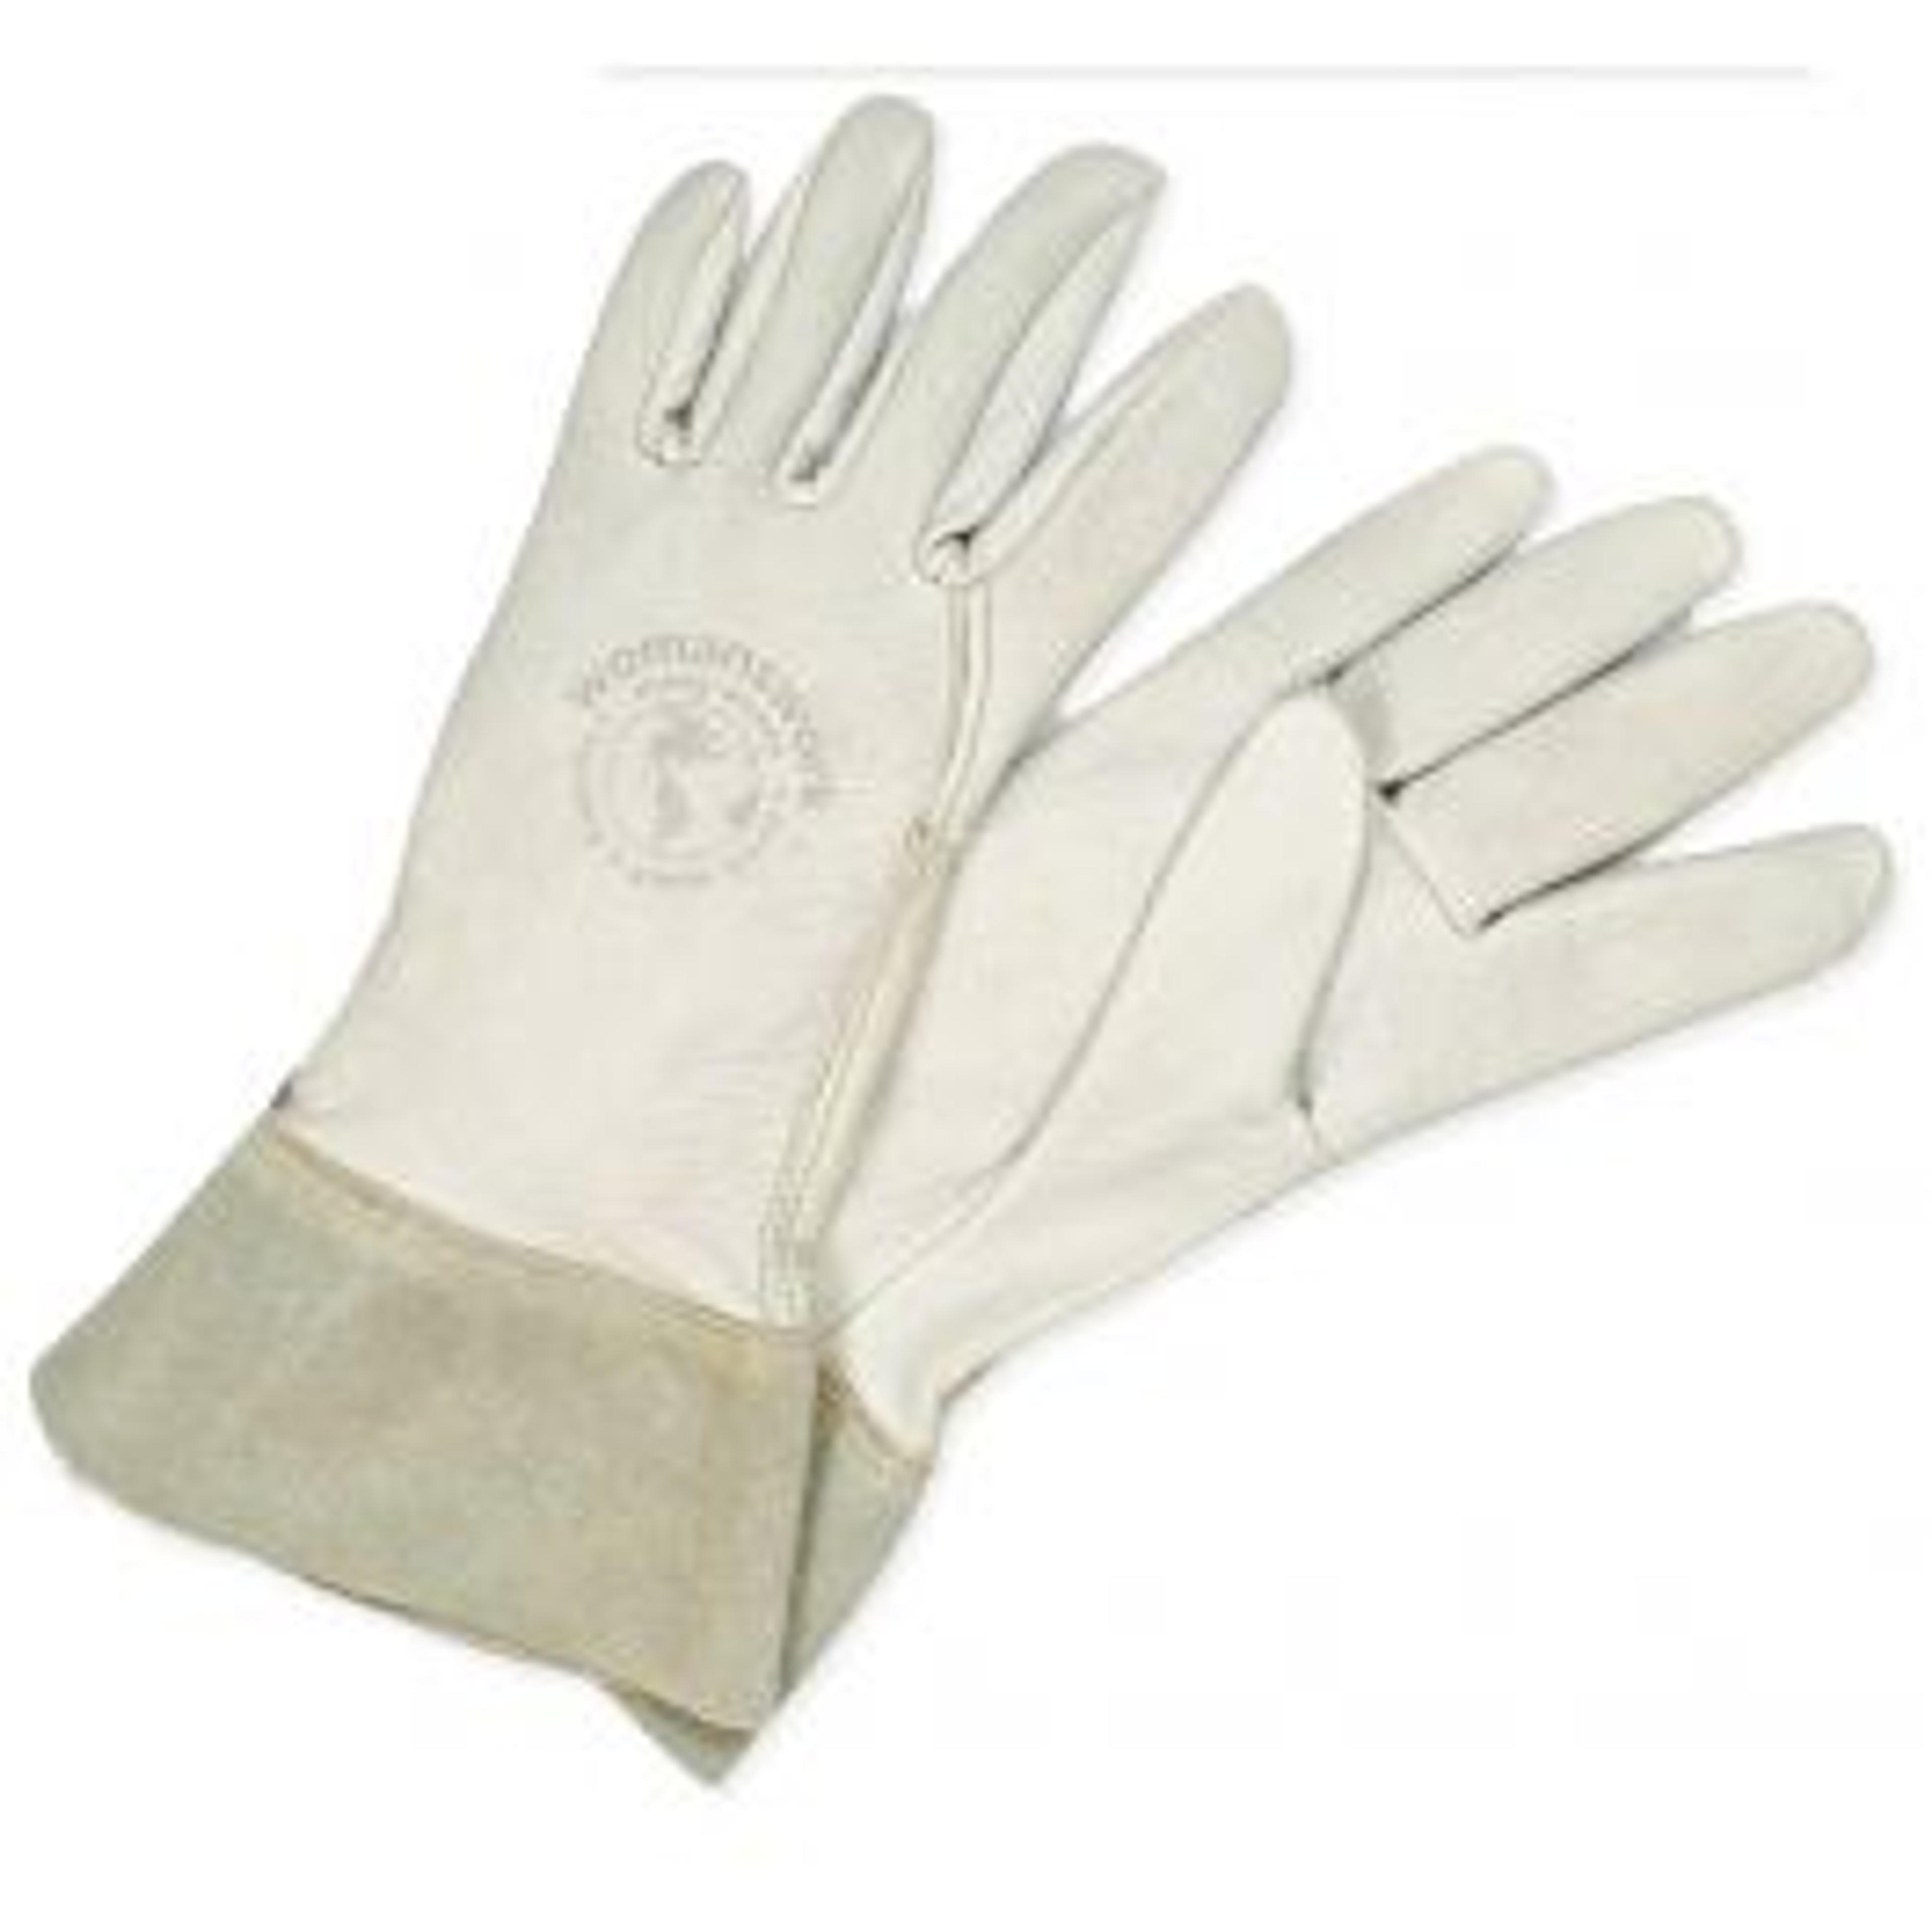 Gardeners Goat Skin Glove - Made in USA | Womanswork